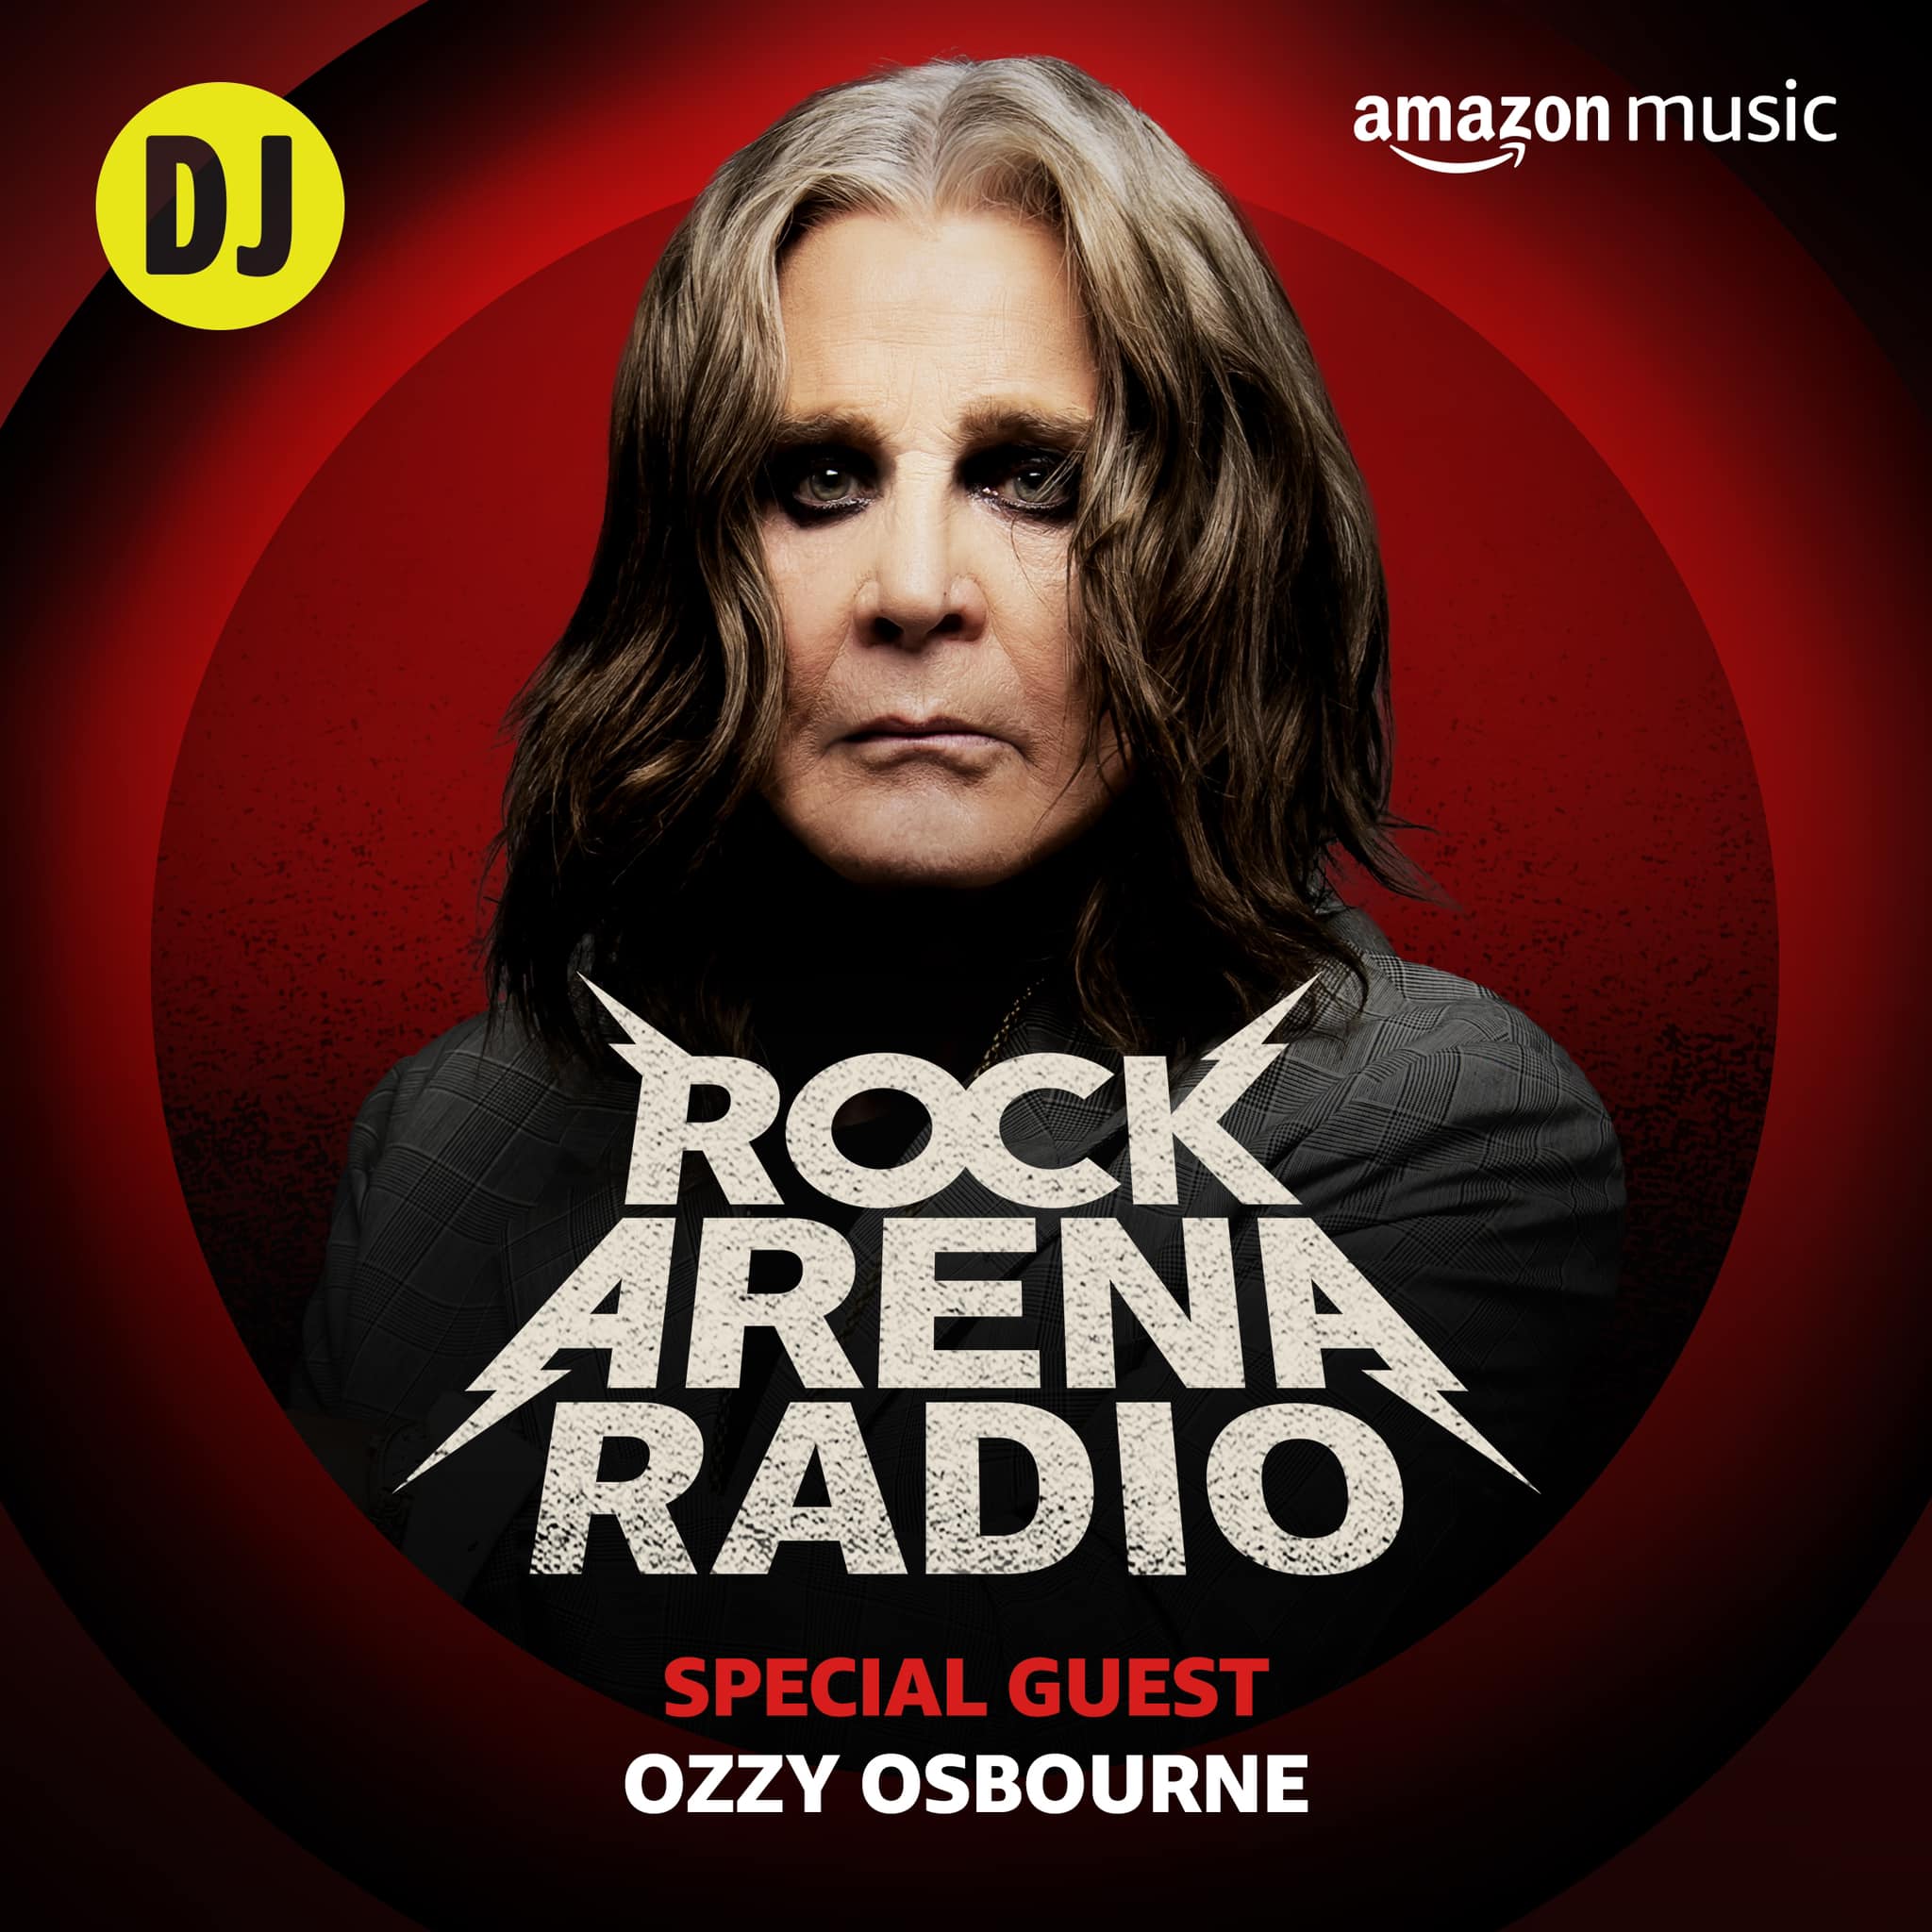 Ozzy Osbourne on Rock Arena Radio